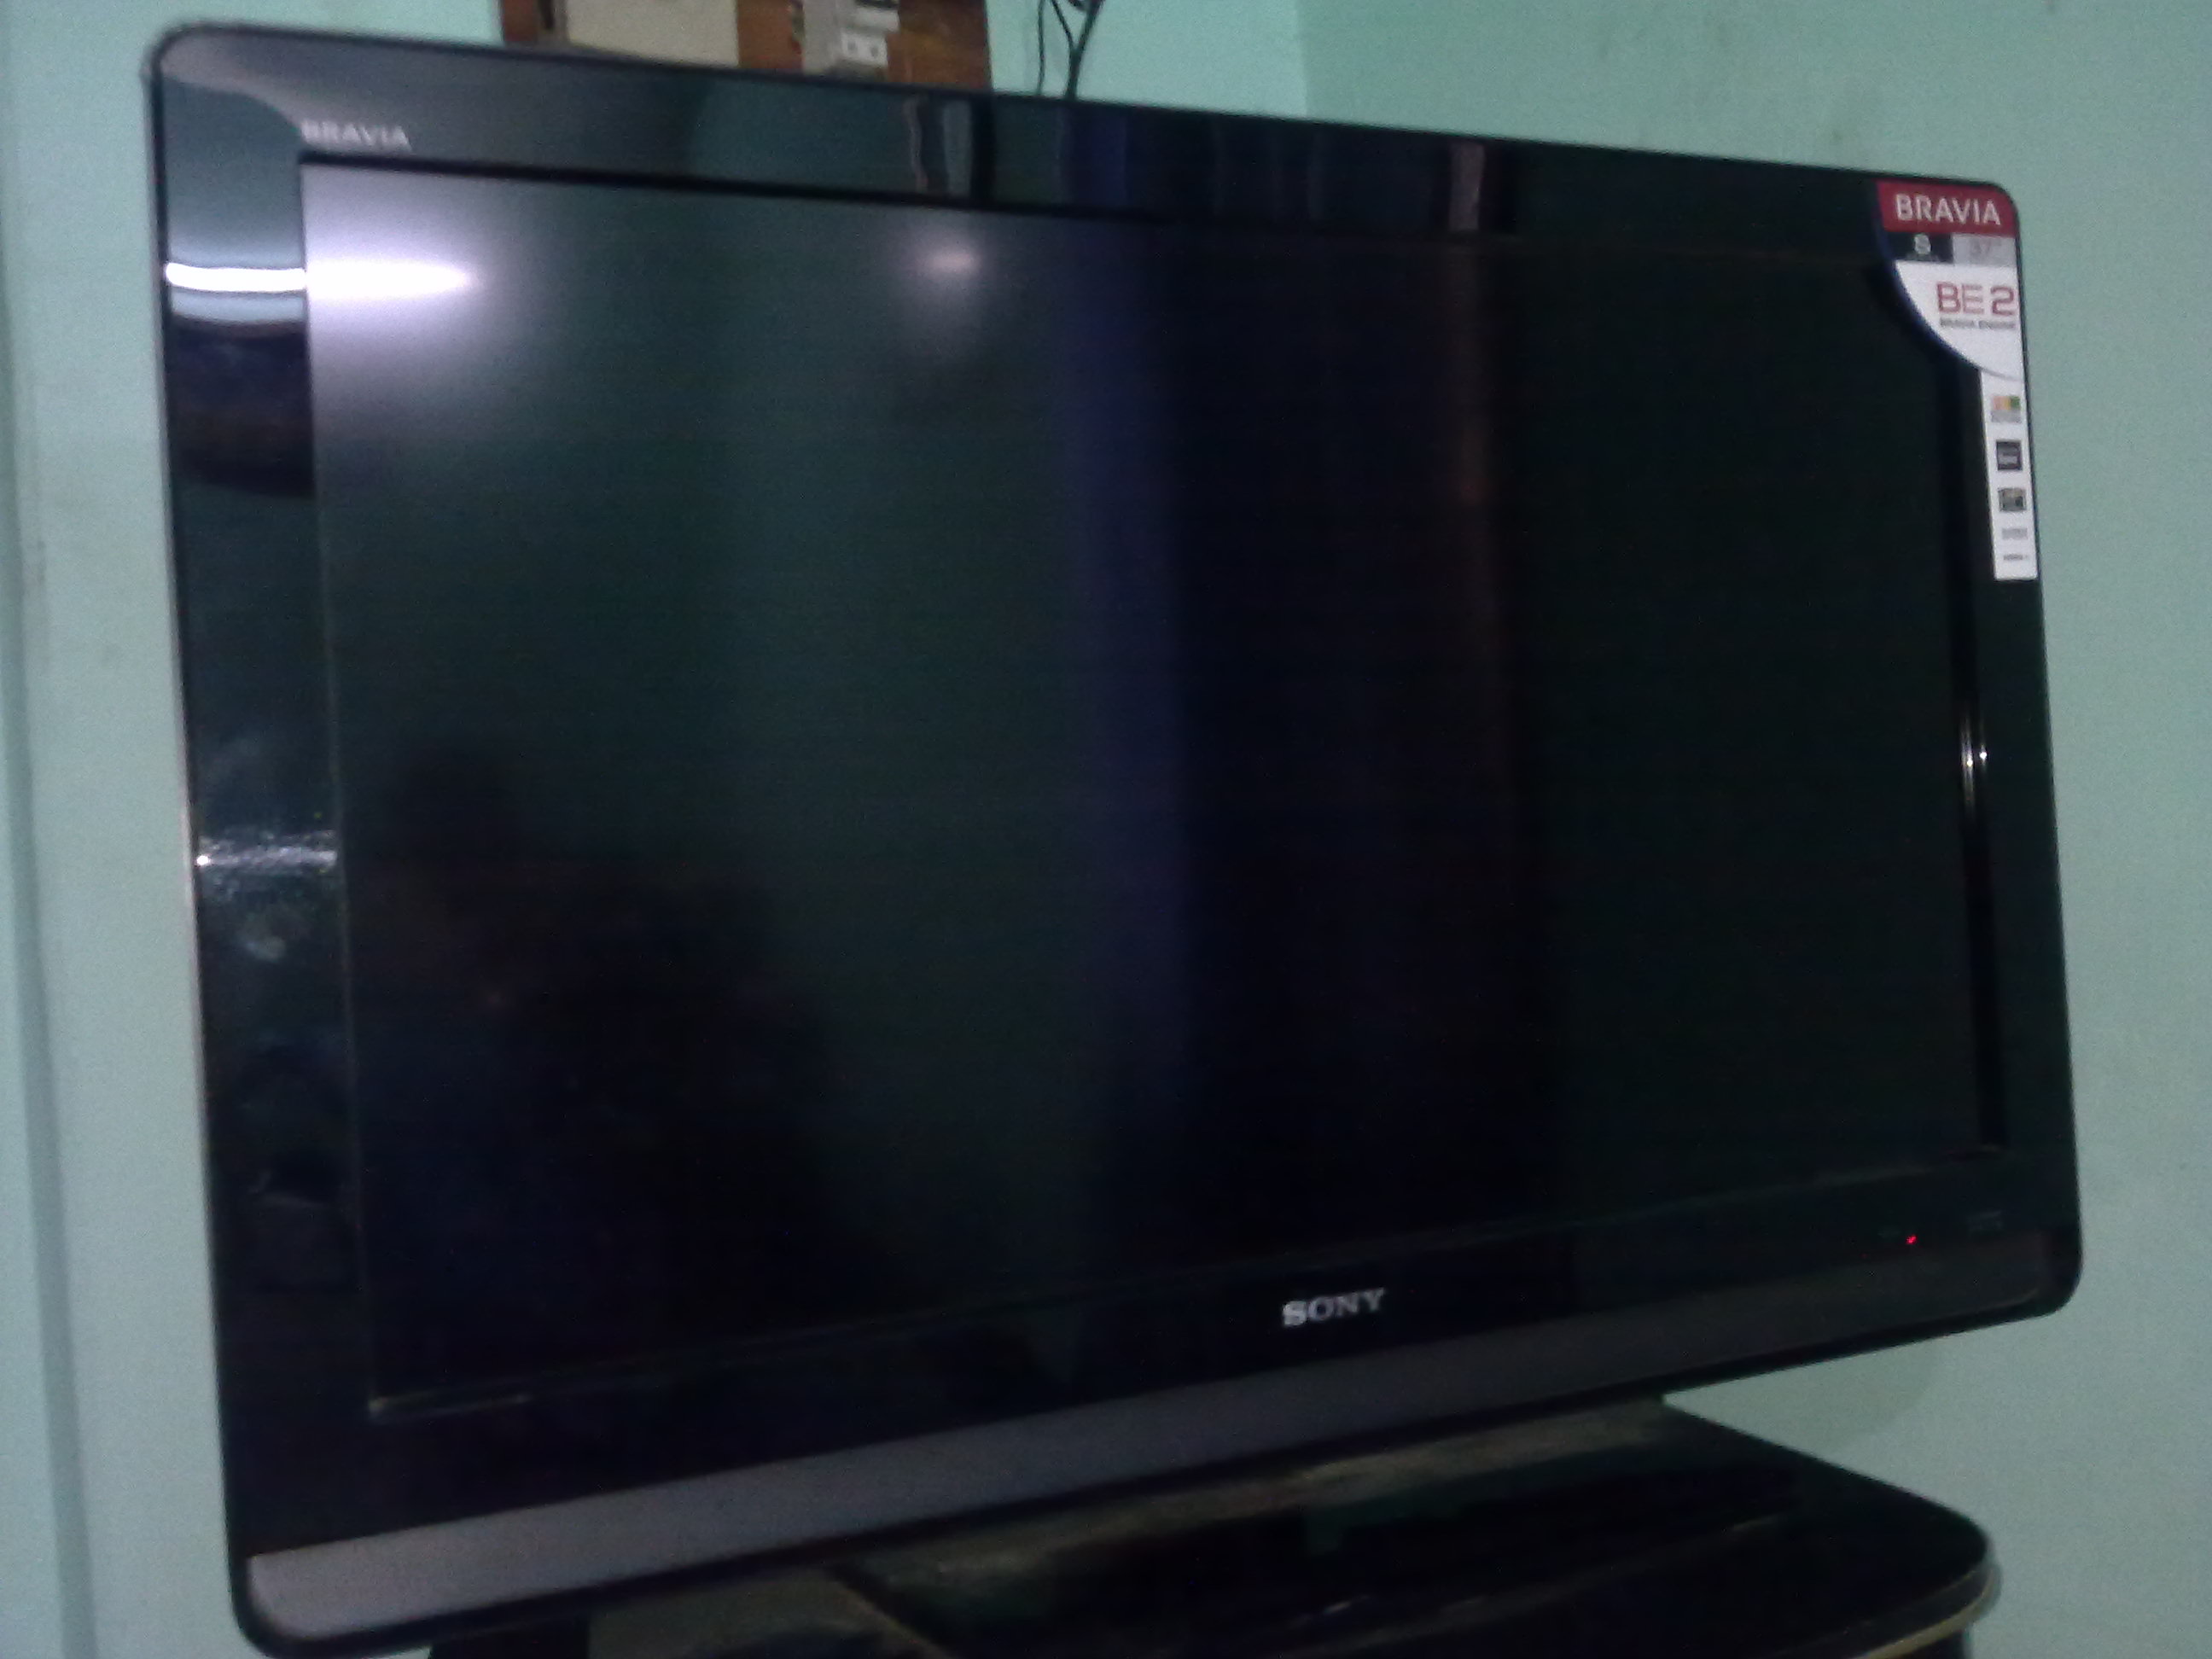 URJANT SALE SONY BRAVIA FULL HD LCD TV FROM DUBAI large image 0